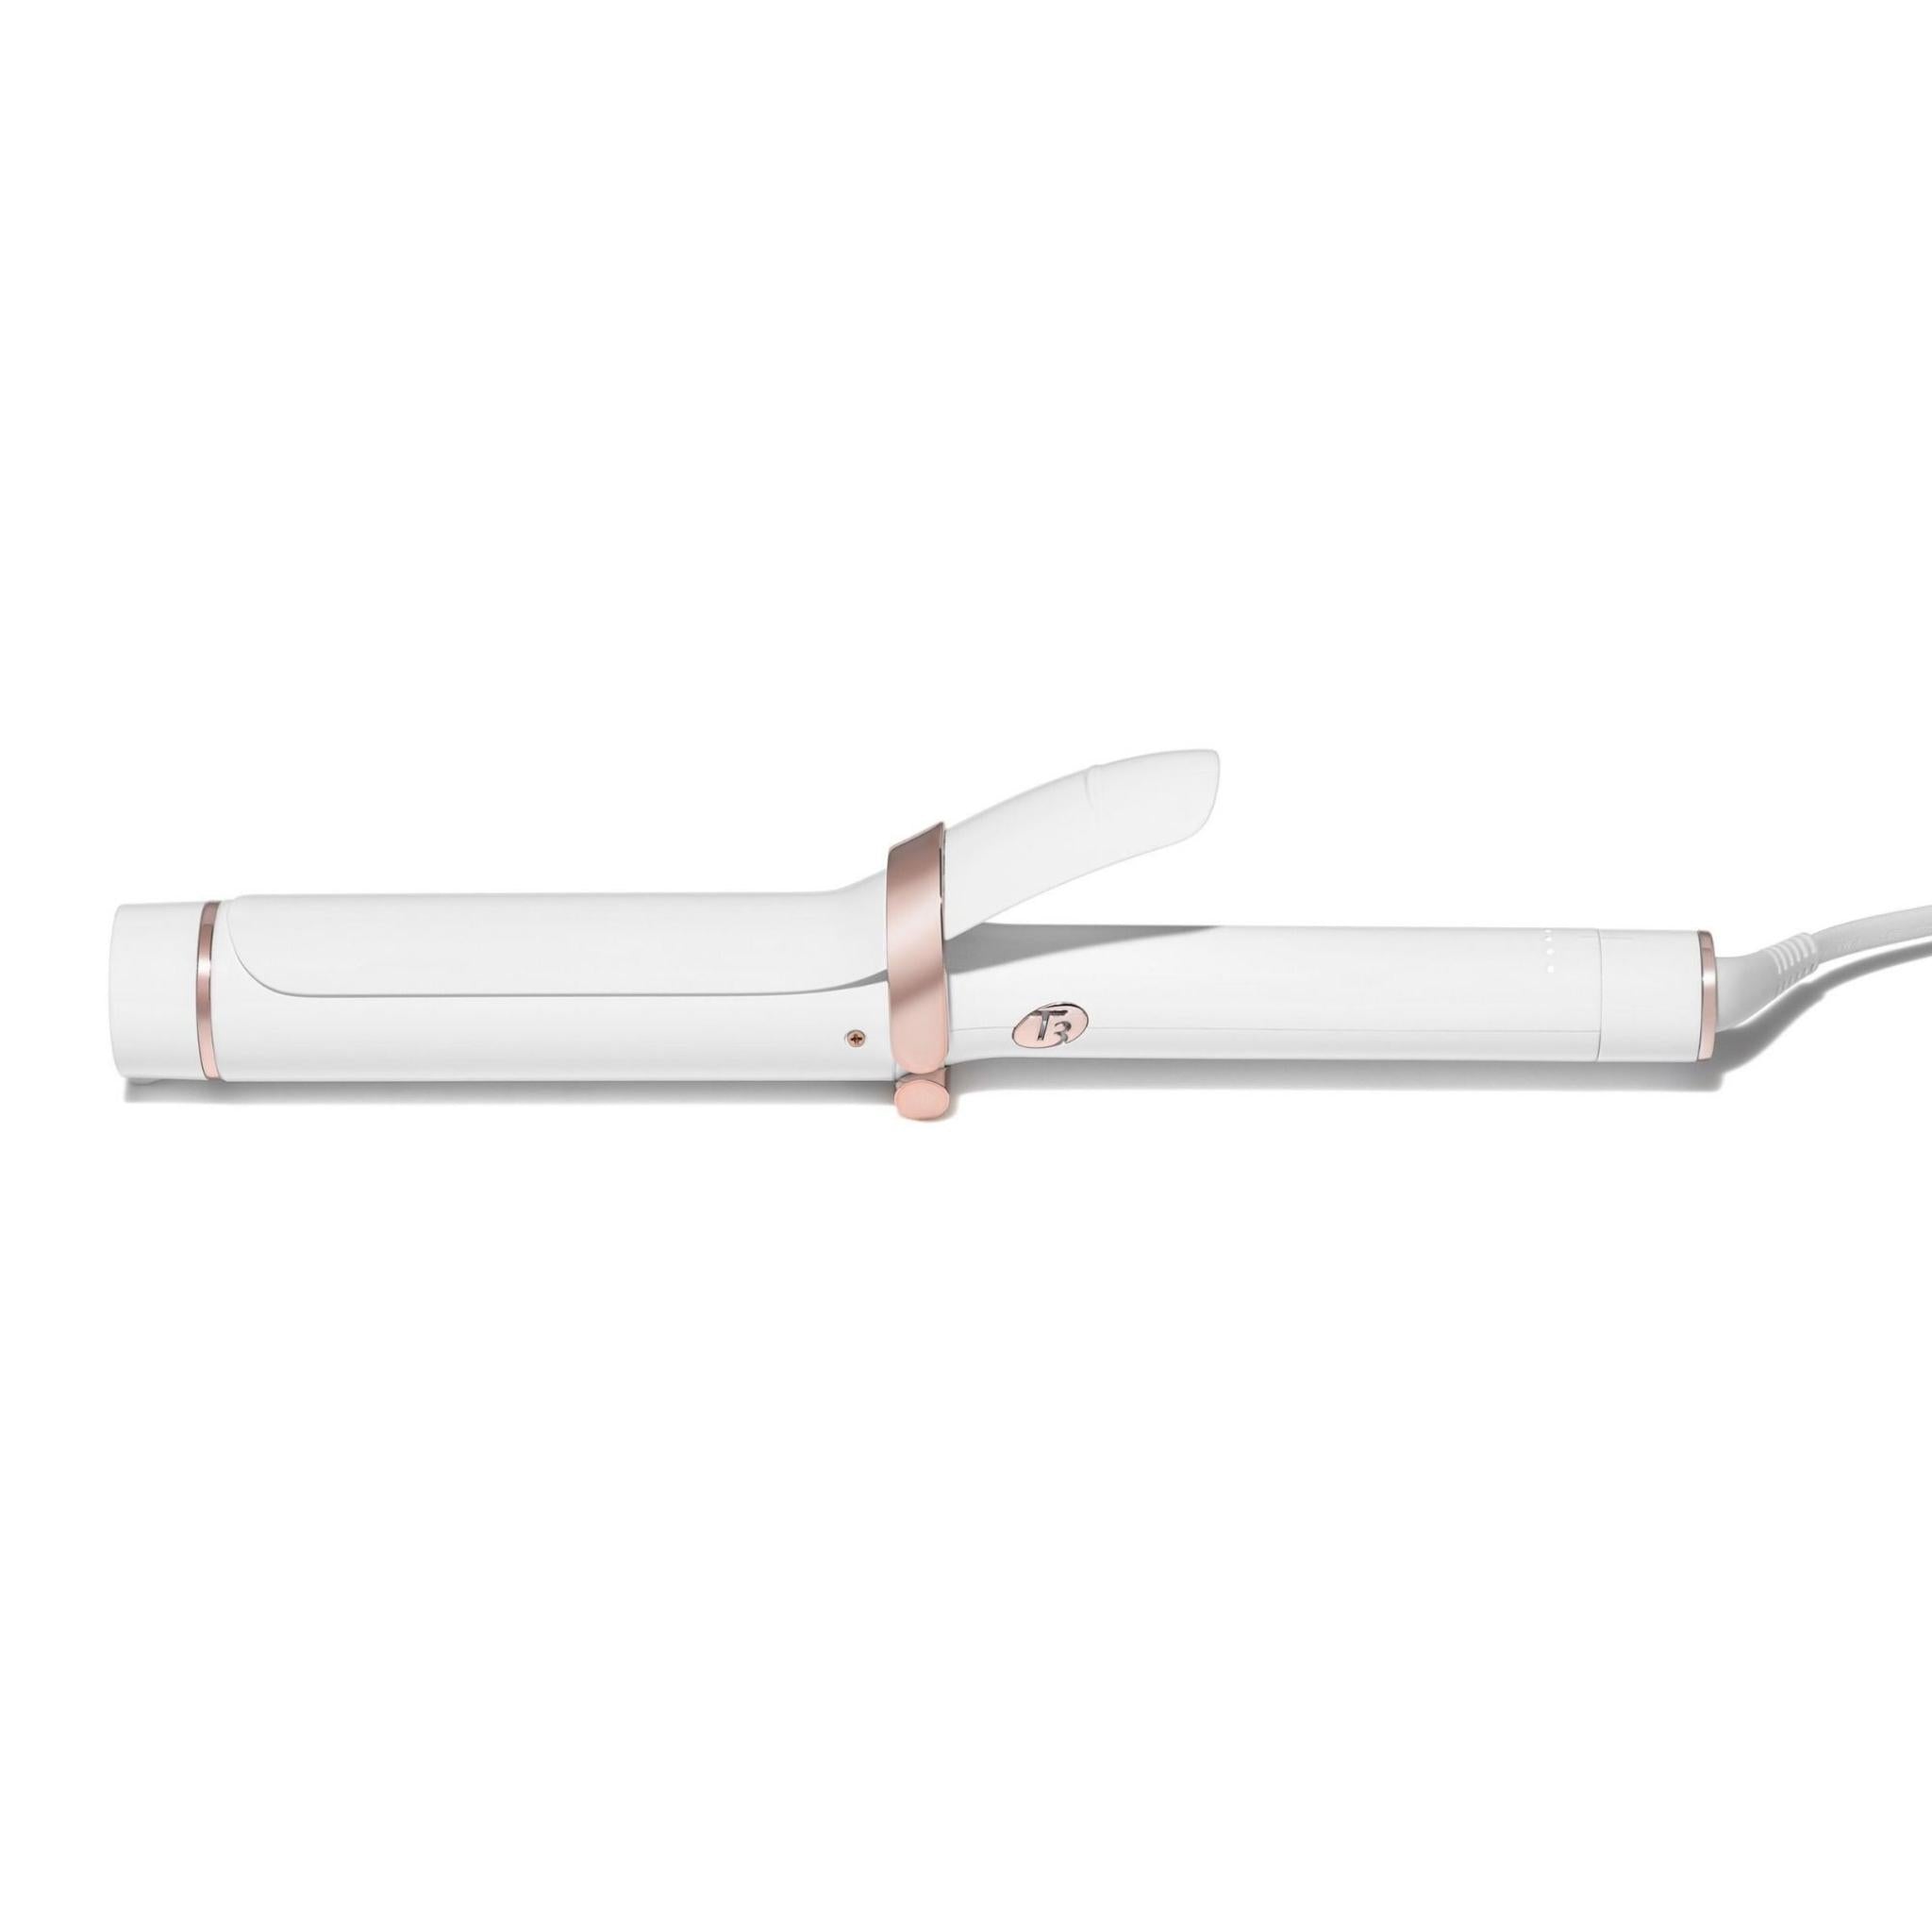 T3. Fer a Friser avec Pince SinglePass Curl Blanc - 1.50” - Concept C. Shop